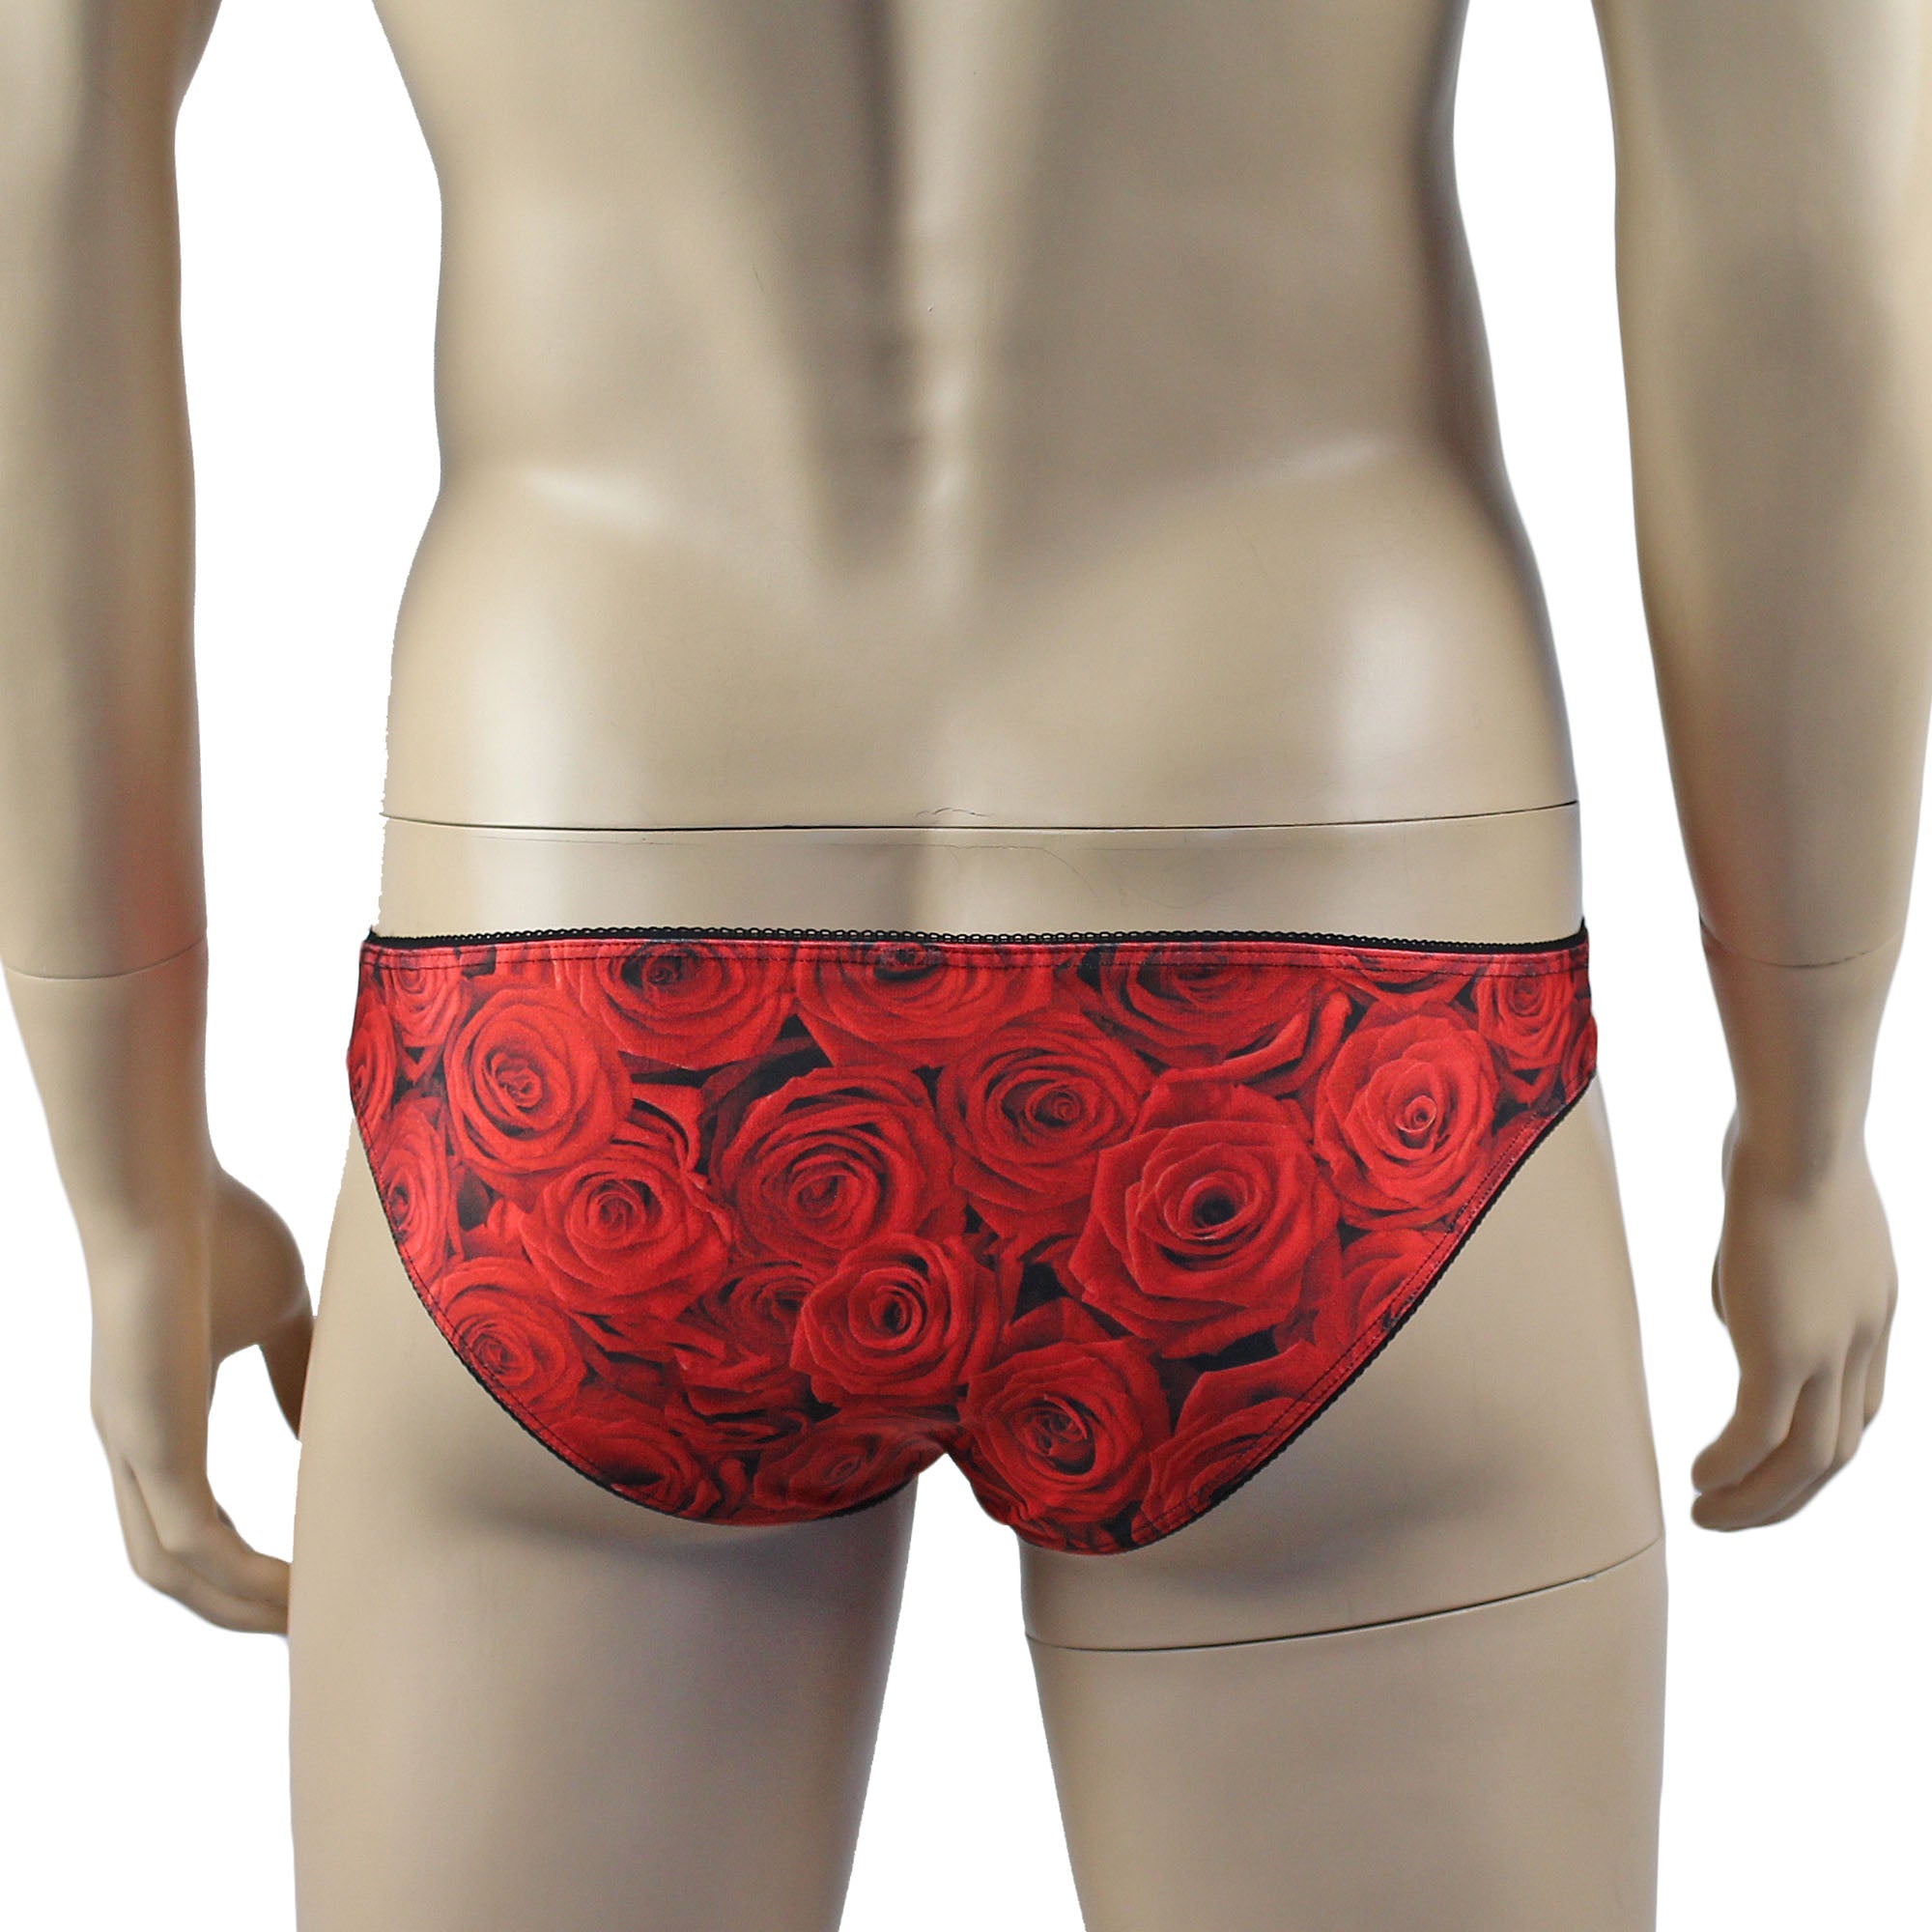 Mens Roses Spandex Bra Top and Bikini Brief with Elastic Pico Trim Red